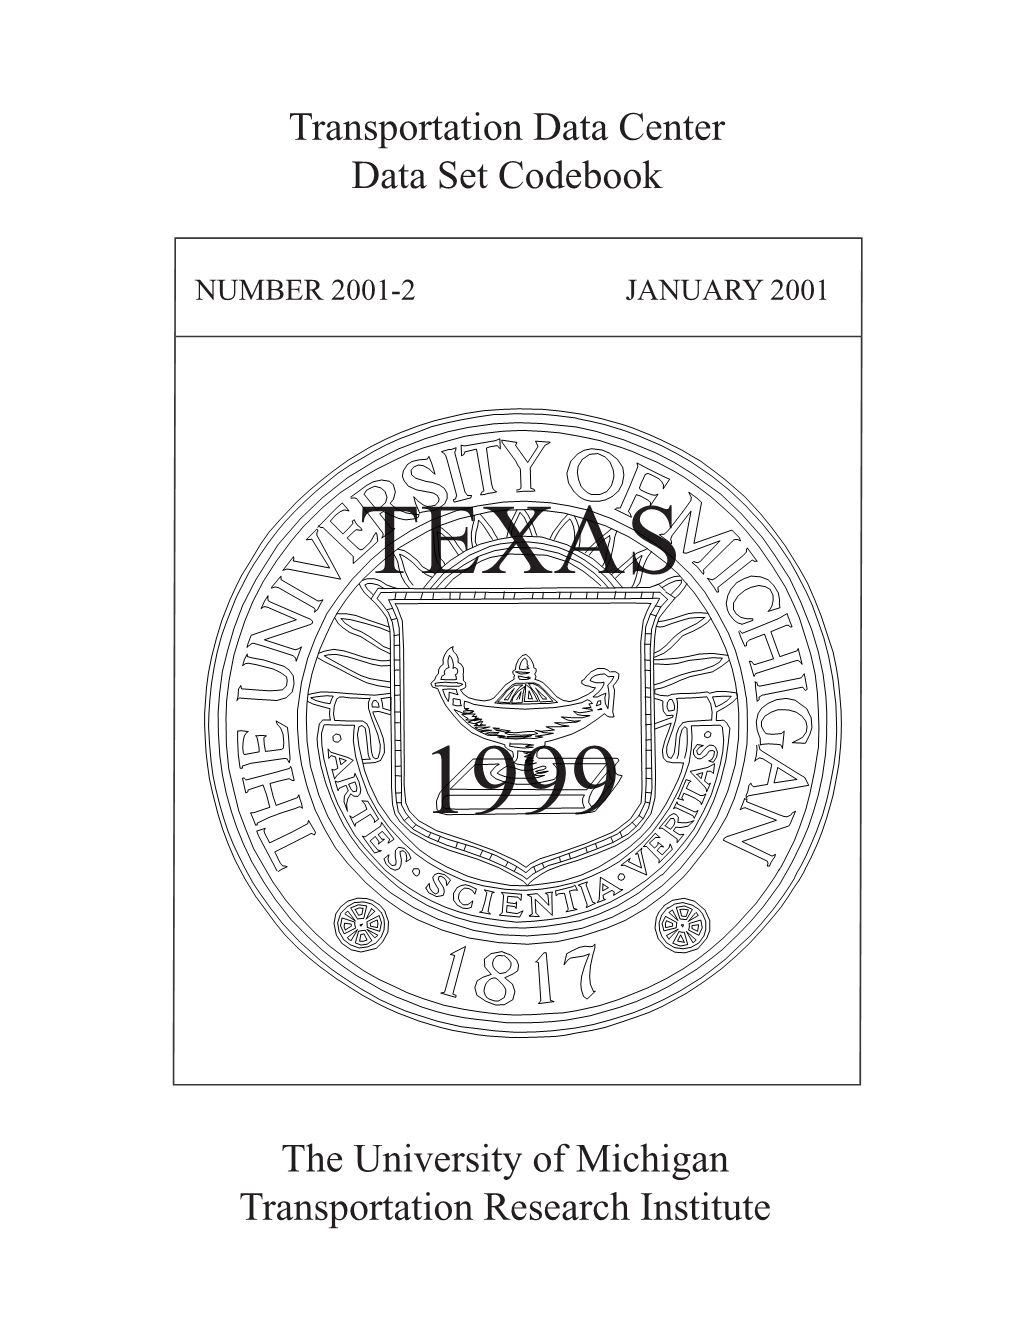 Texas 1999 Motor Vehicle Accident Codebook